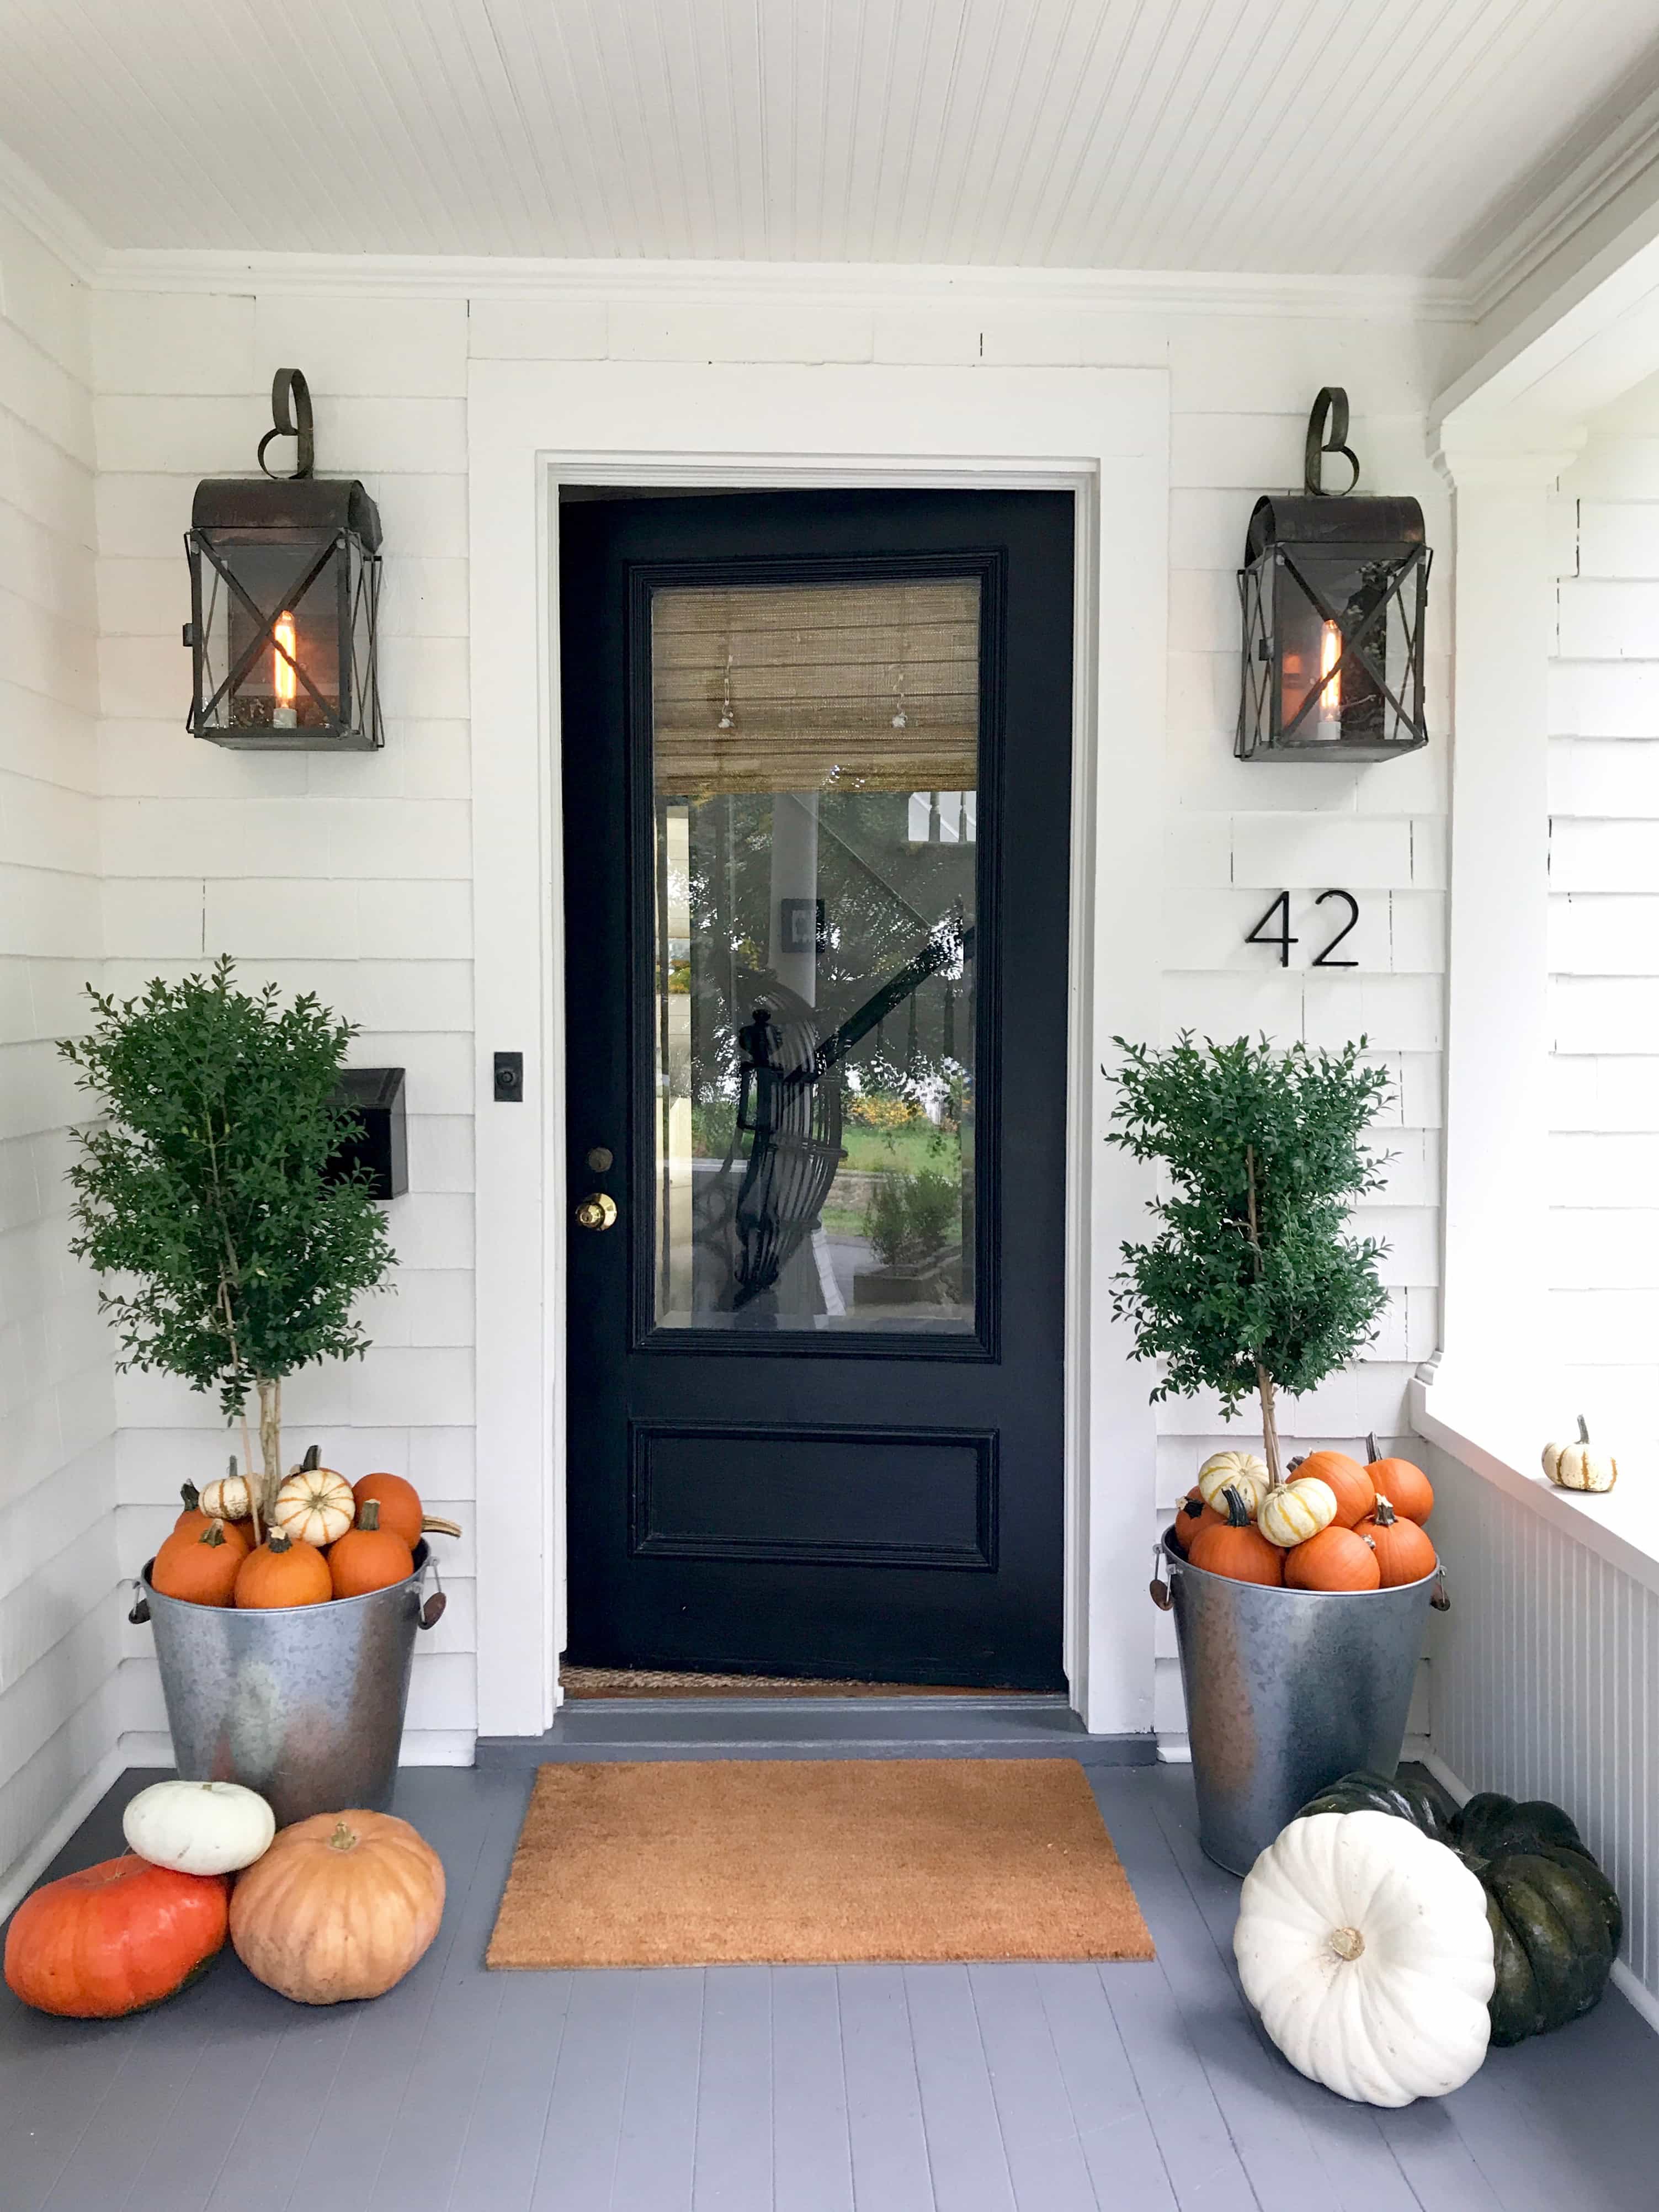 Pumpkins-galvanized-pots-front-porch-Halloween-white-cottage